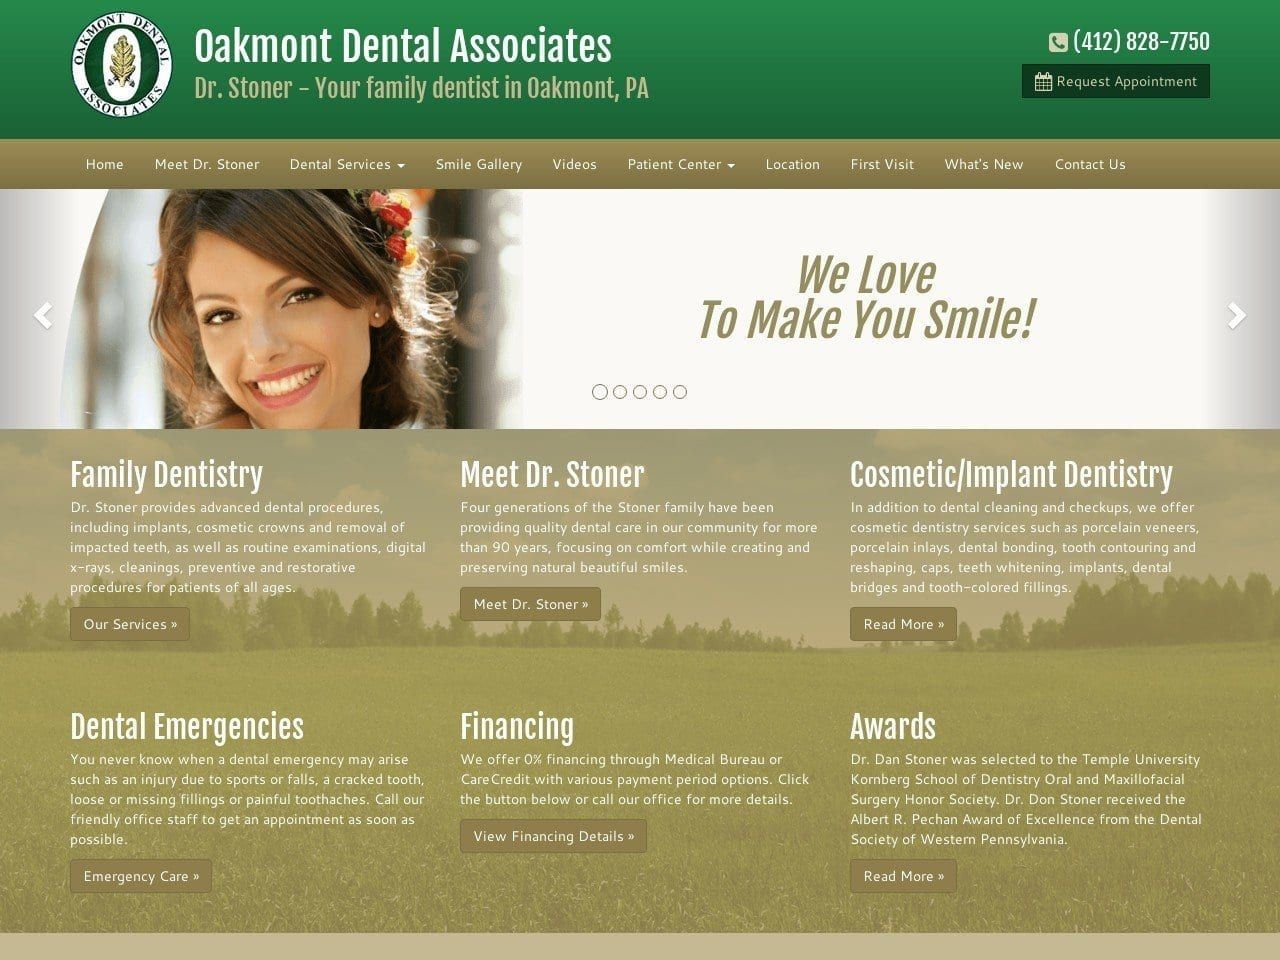 Oakmont Dental Associates Website Screenshot from oakmontdental.net